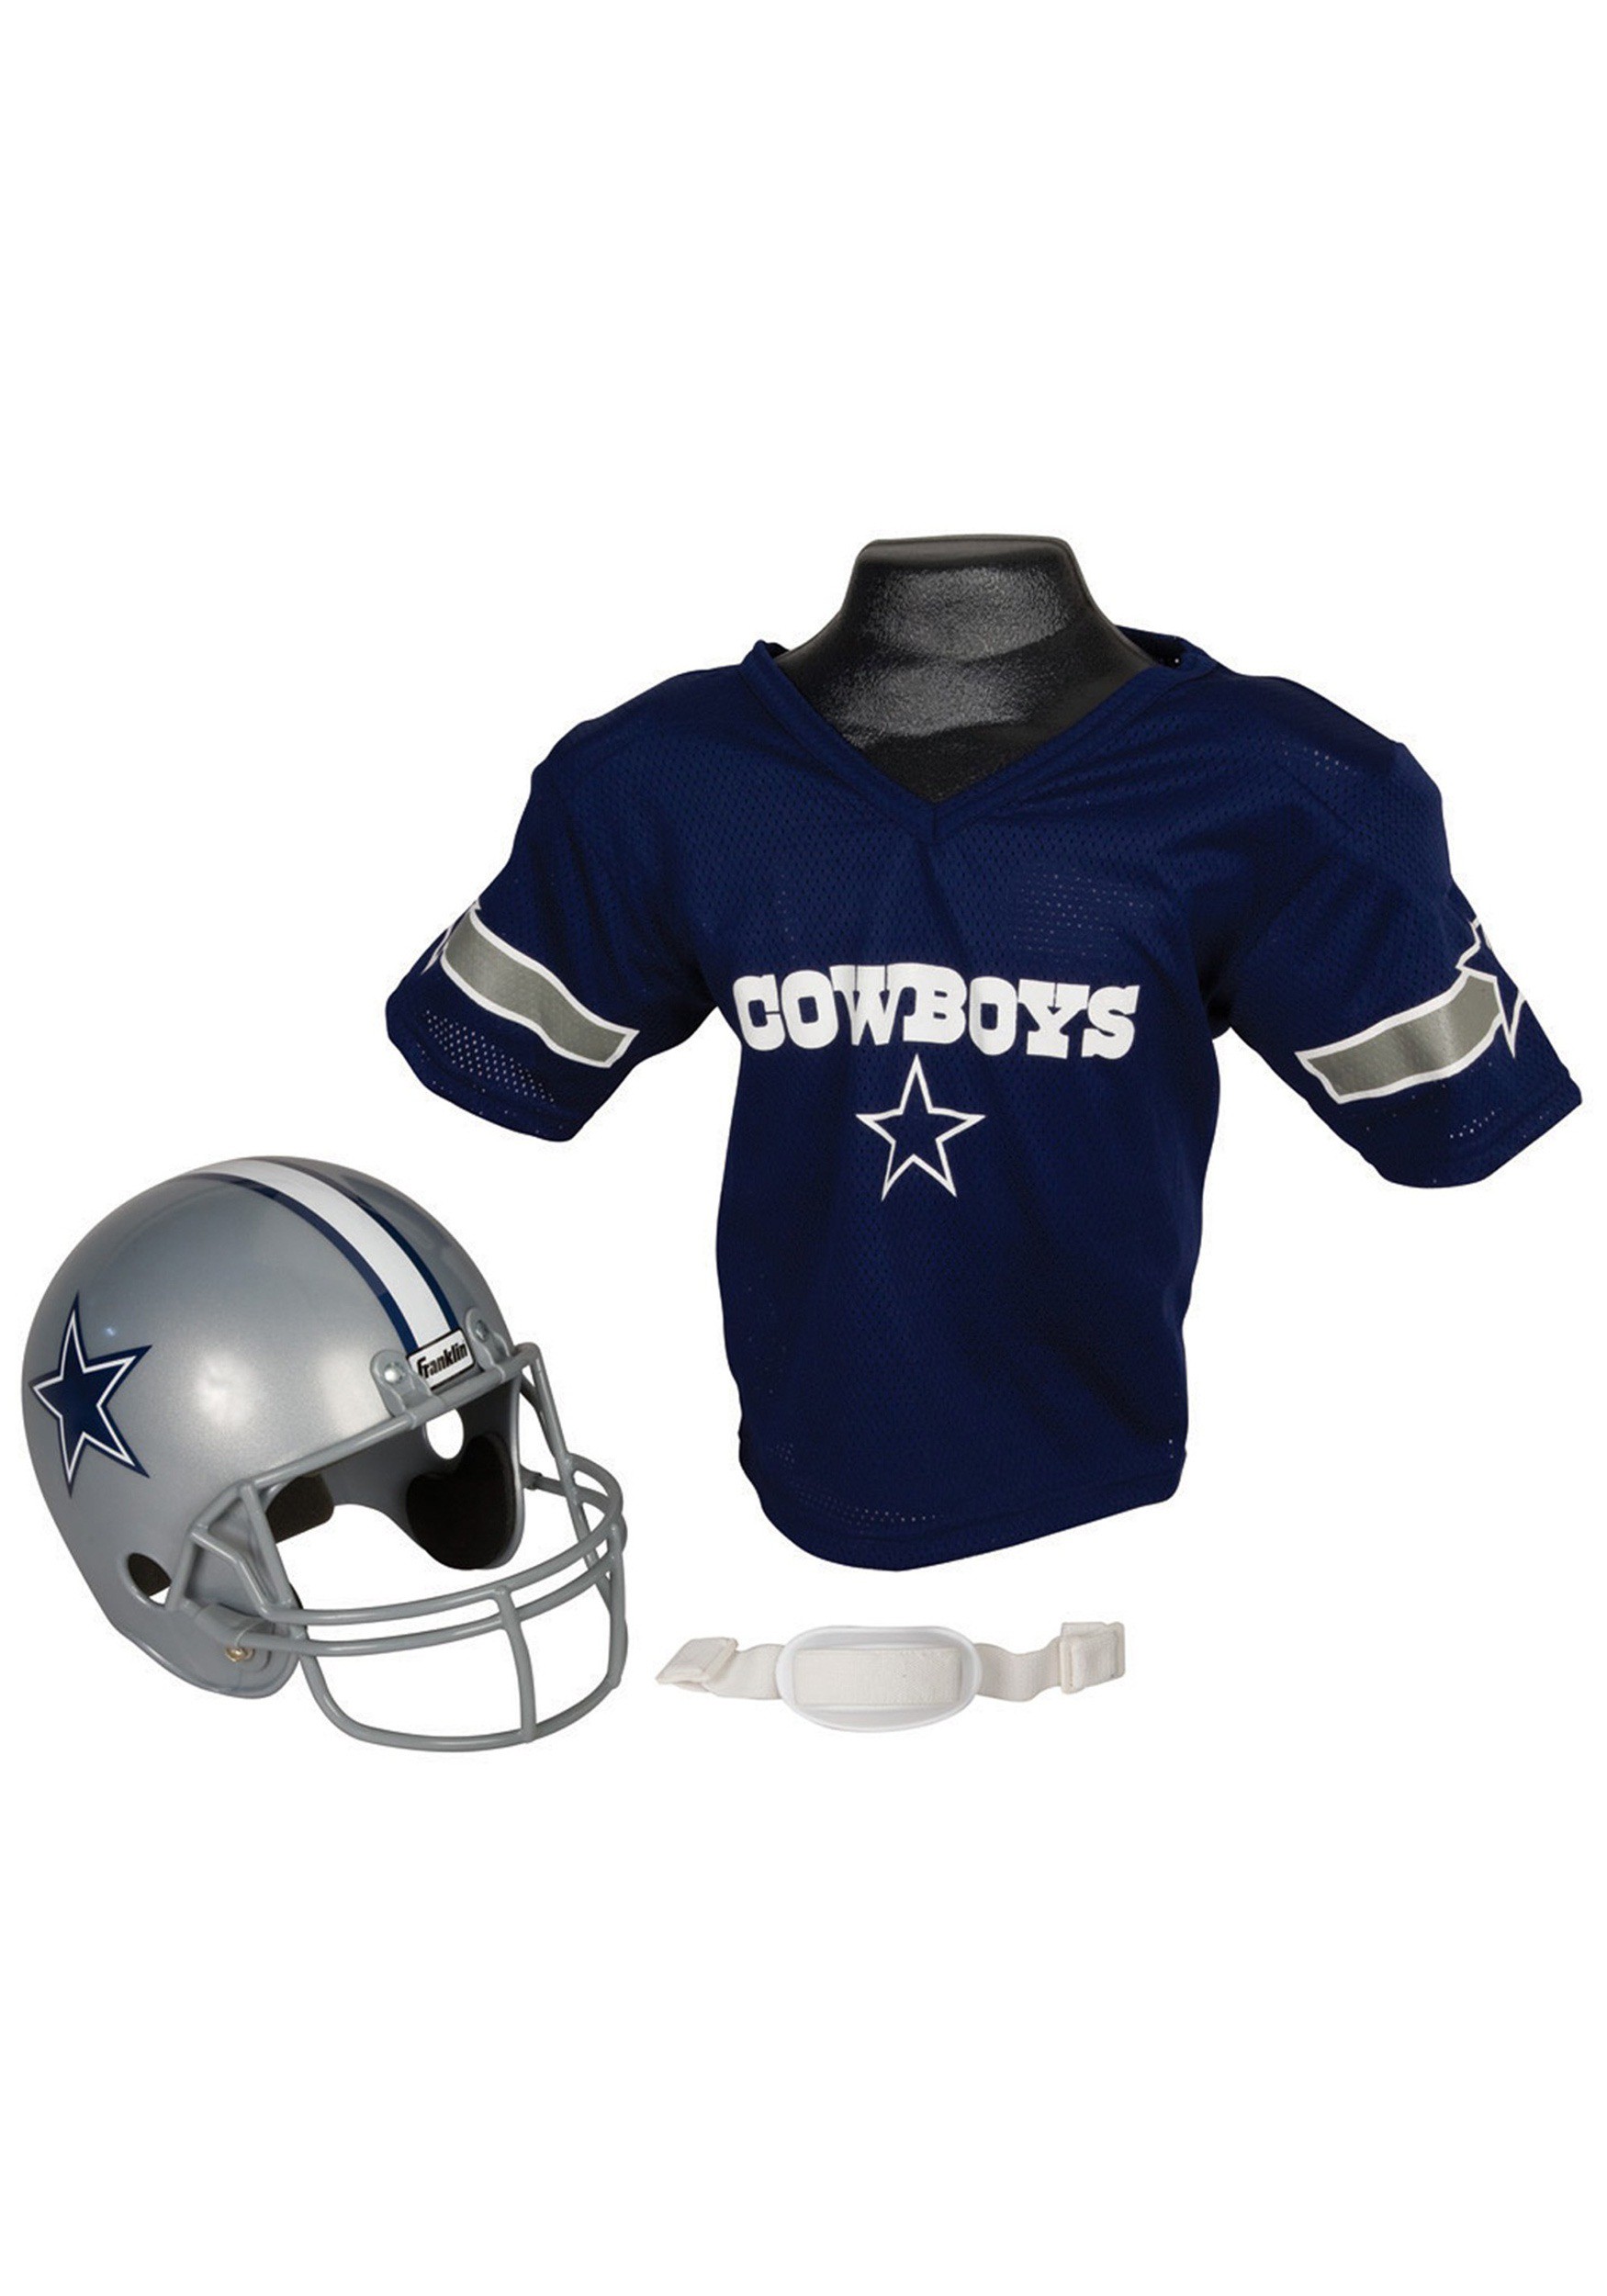 Child NFL Dallas Cowboys Helmet and Jersey Costume Set